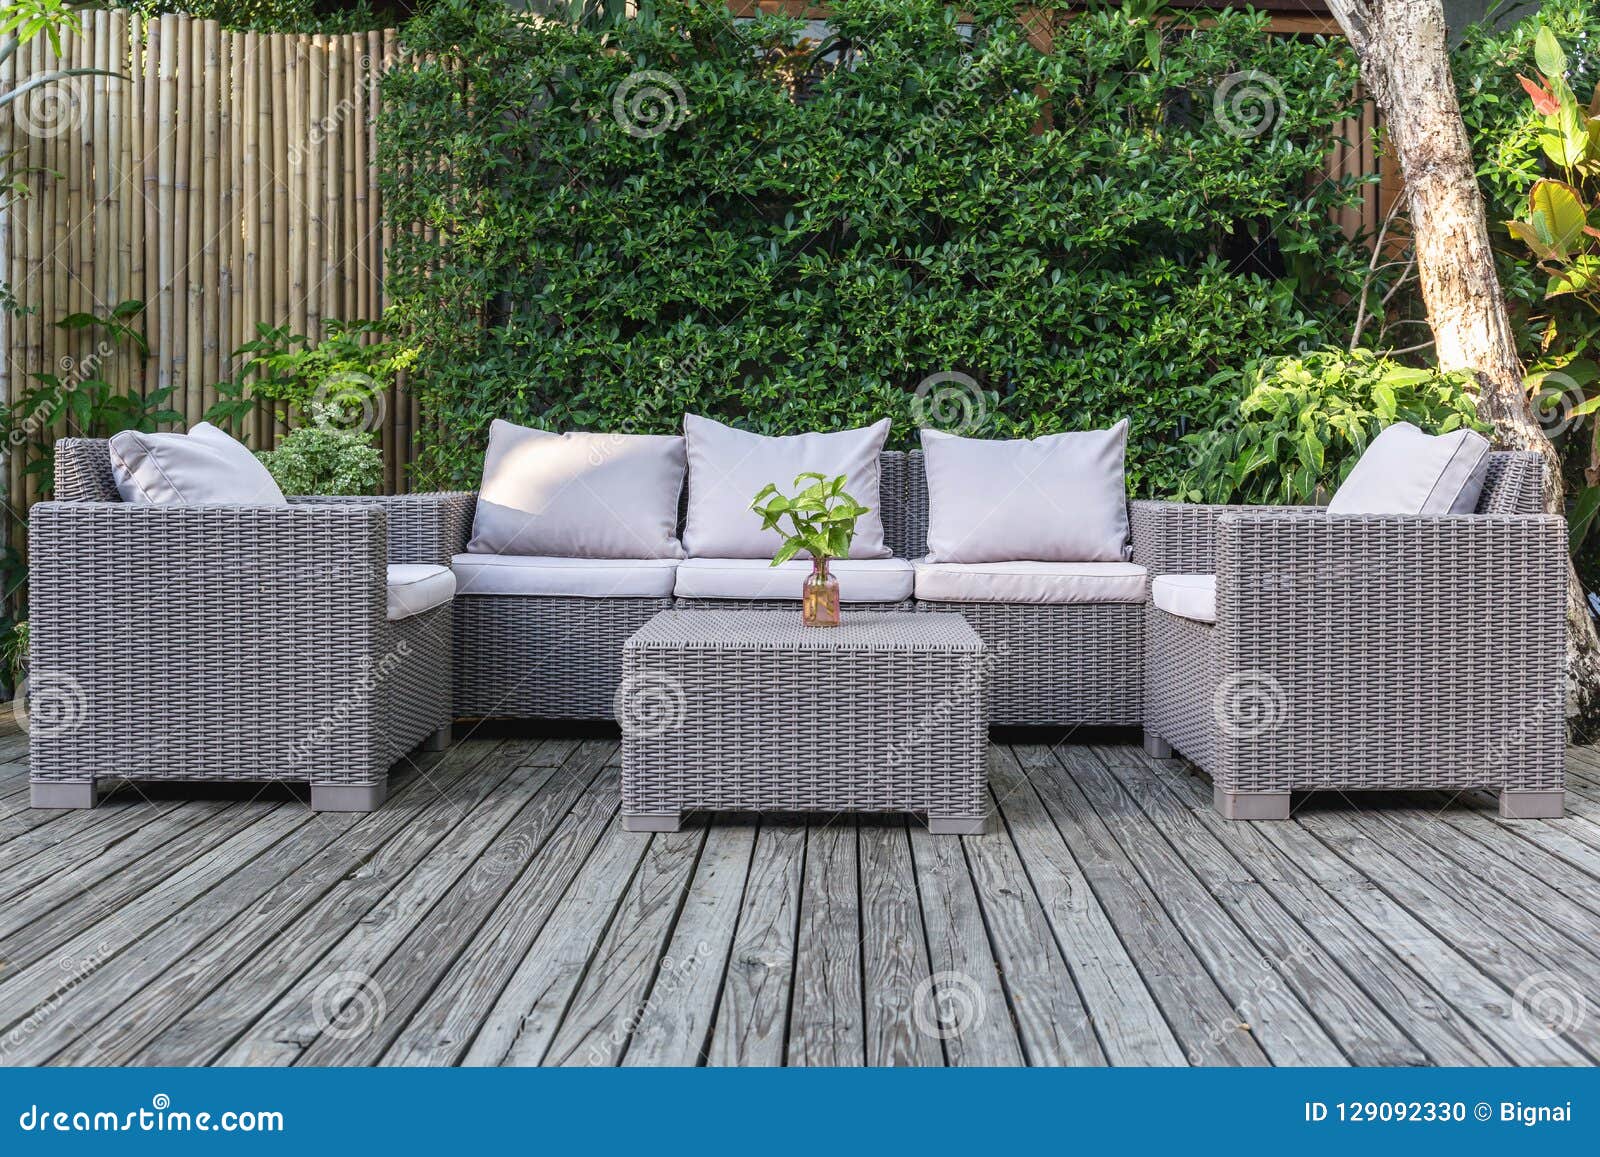 large terrace patio with rattan garden furniture in the garden on wooden floor.